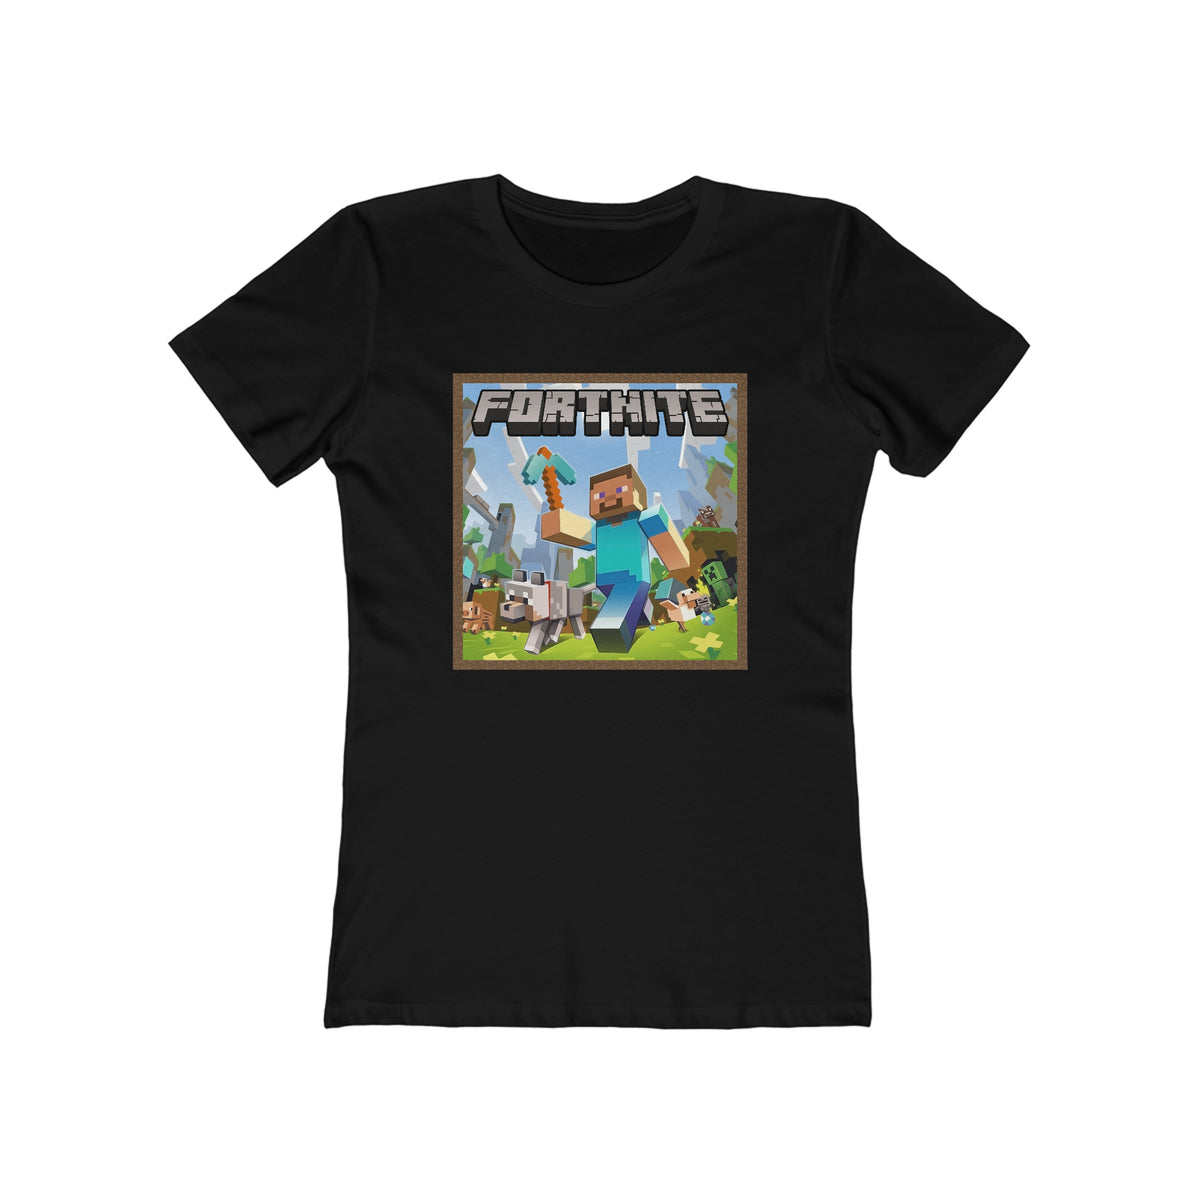 Fortnite - Women’s T-Shirt